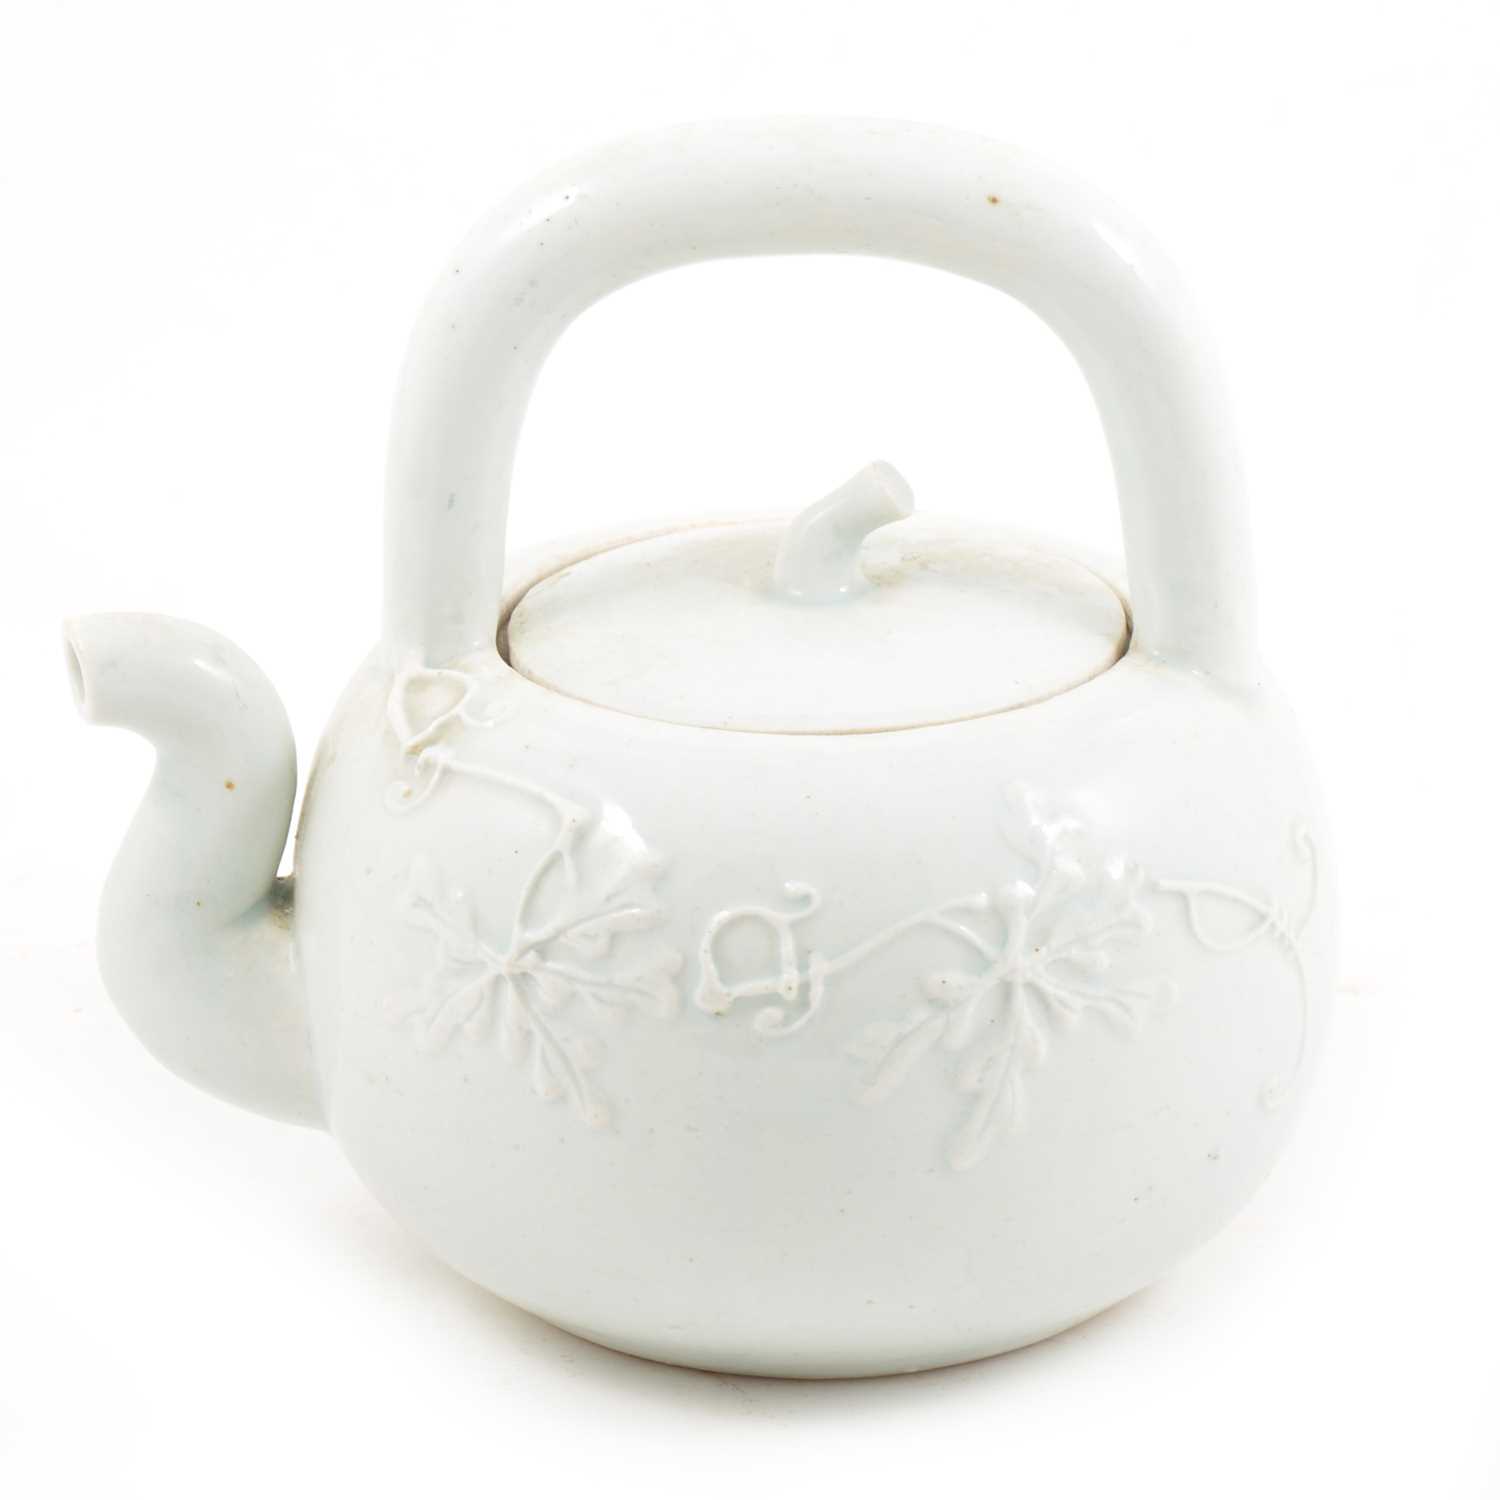 Lot 66 - Chinese porcelain teapot